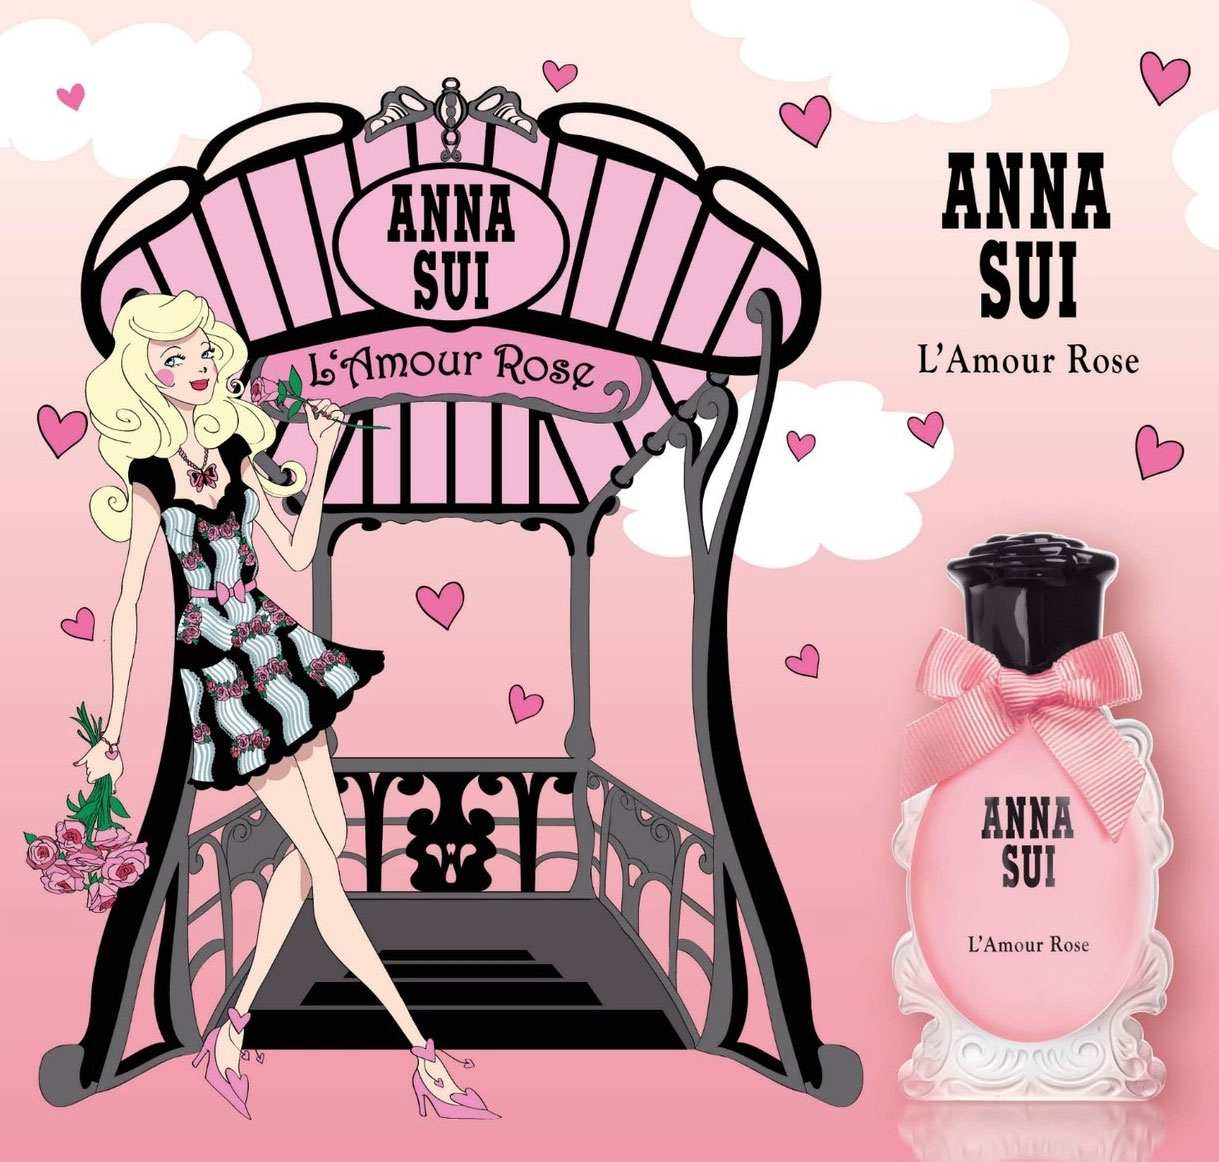 Anna Sui L'Amour Rose Perfume Ad